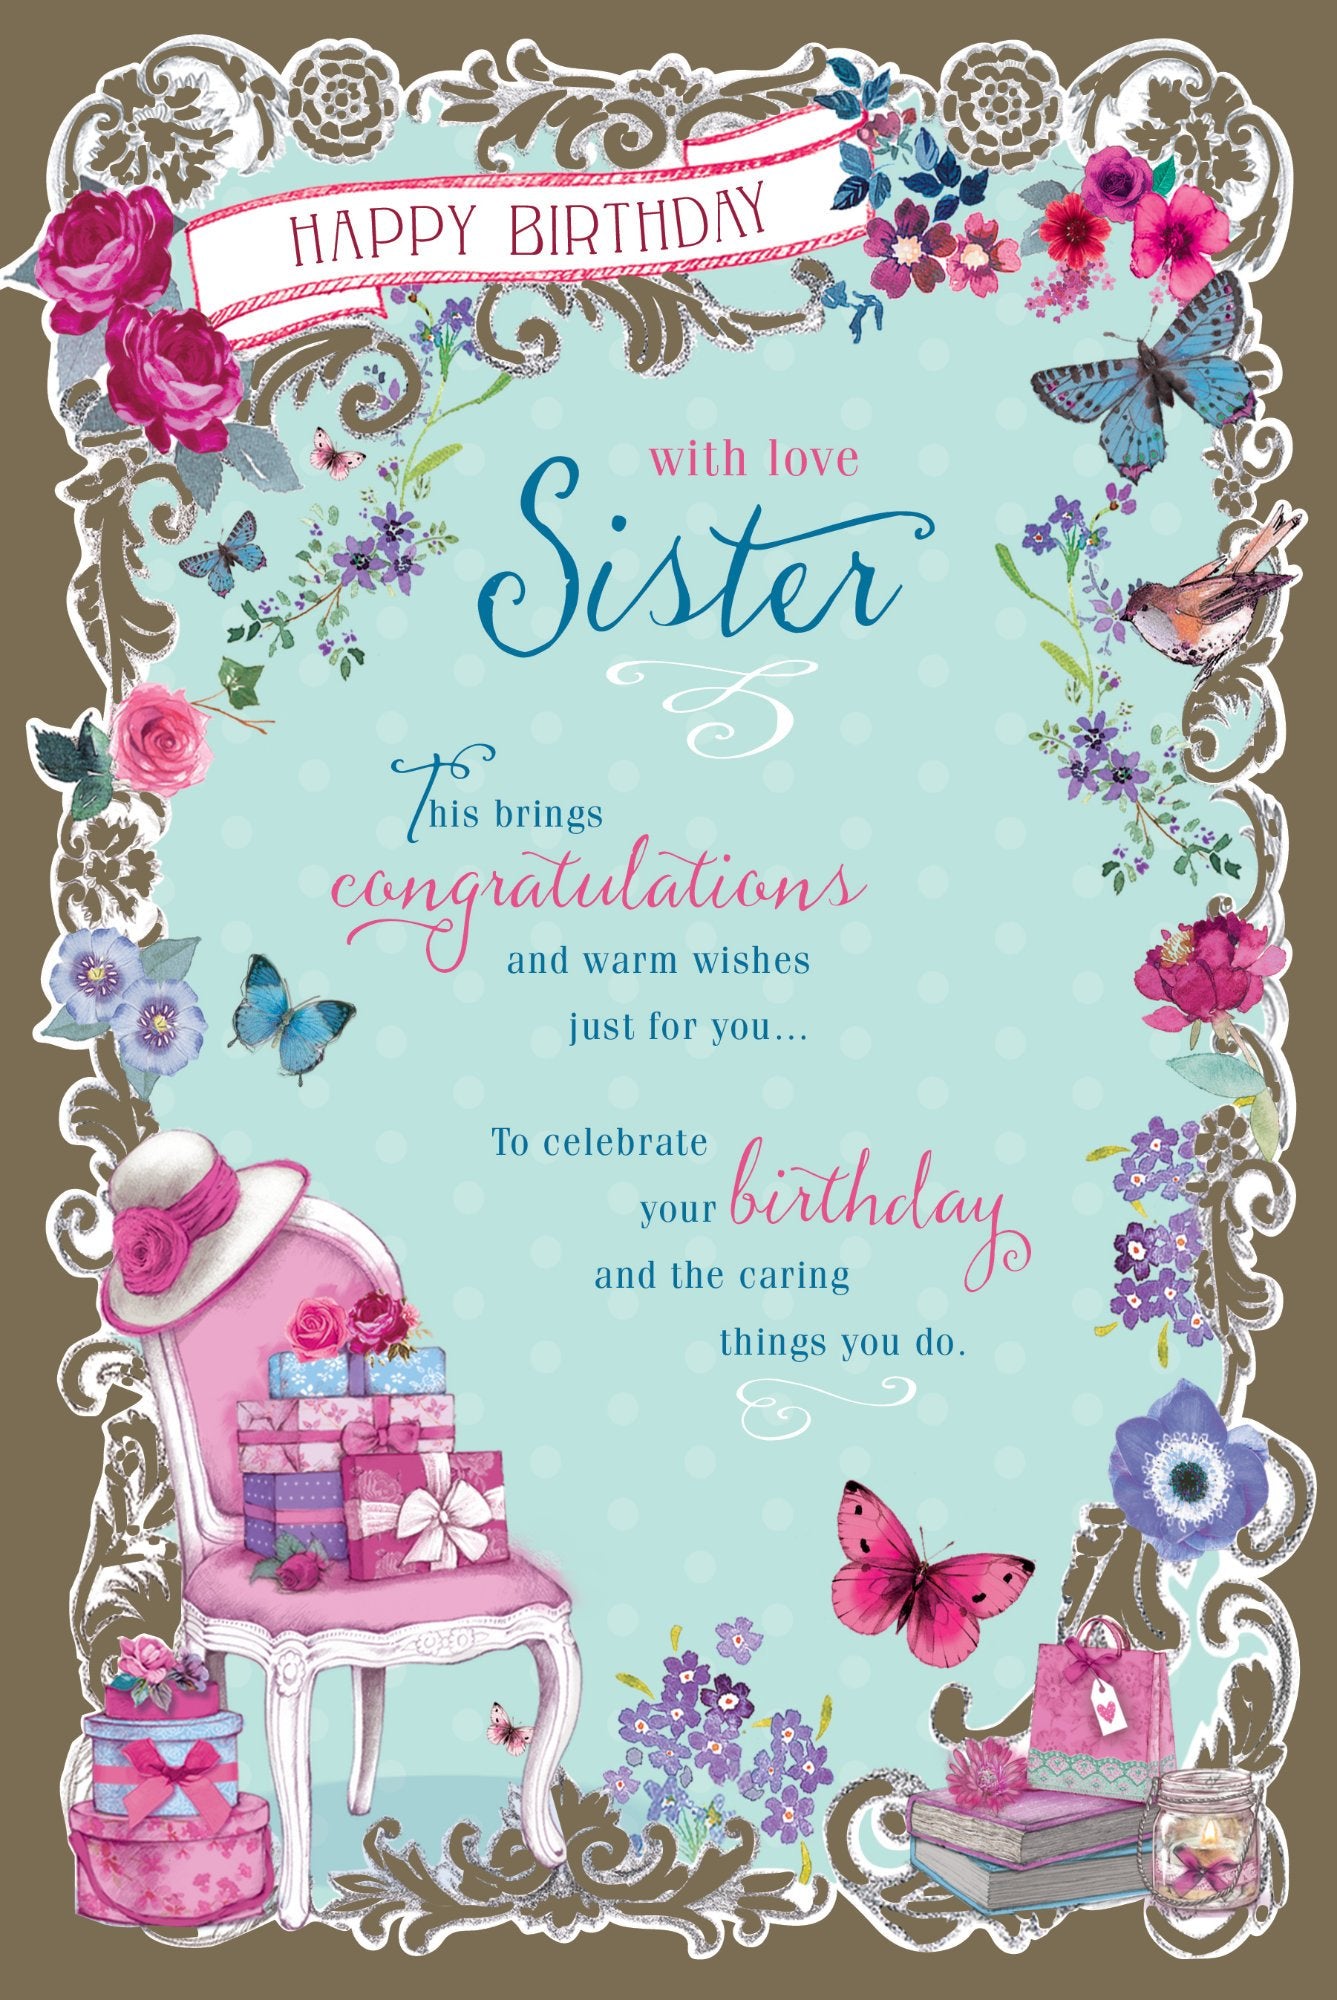 Photograph of Sister Birthday Caring Greetings Card at Nicole's Shop